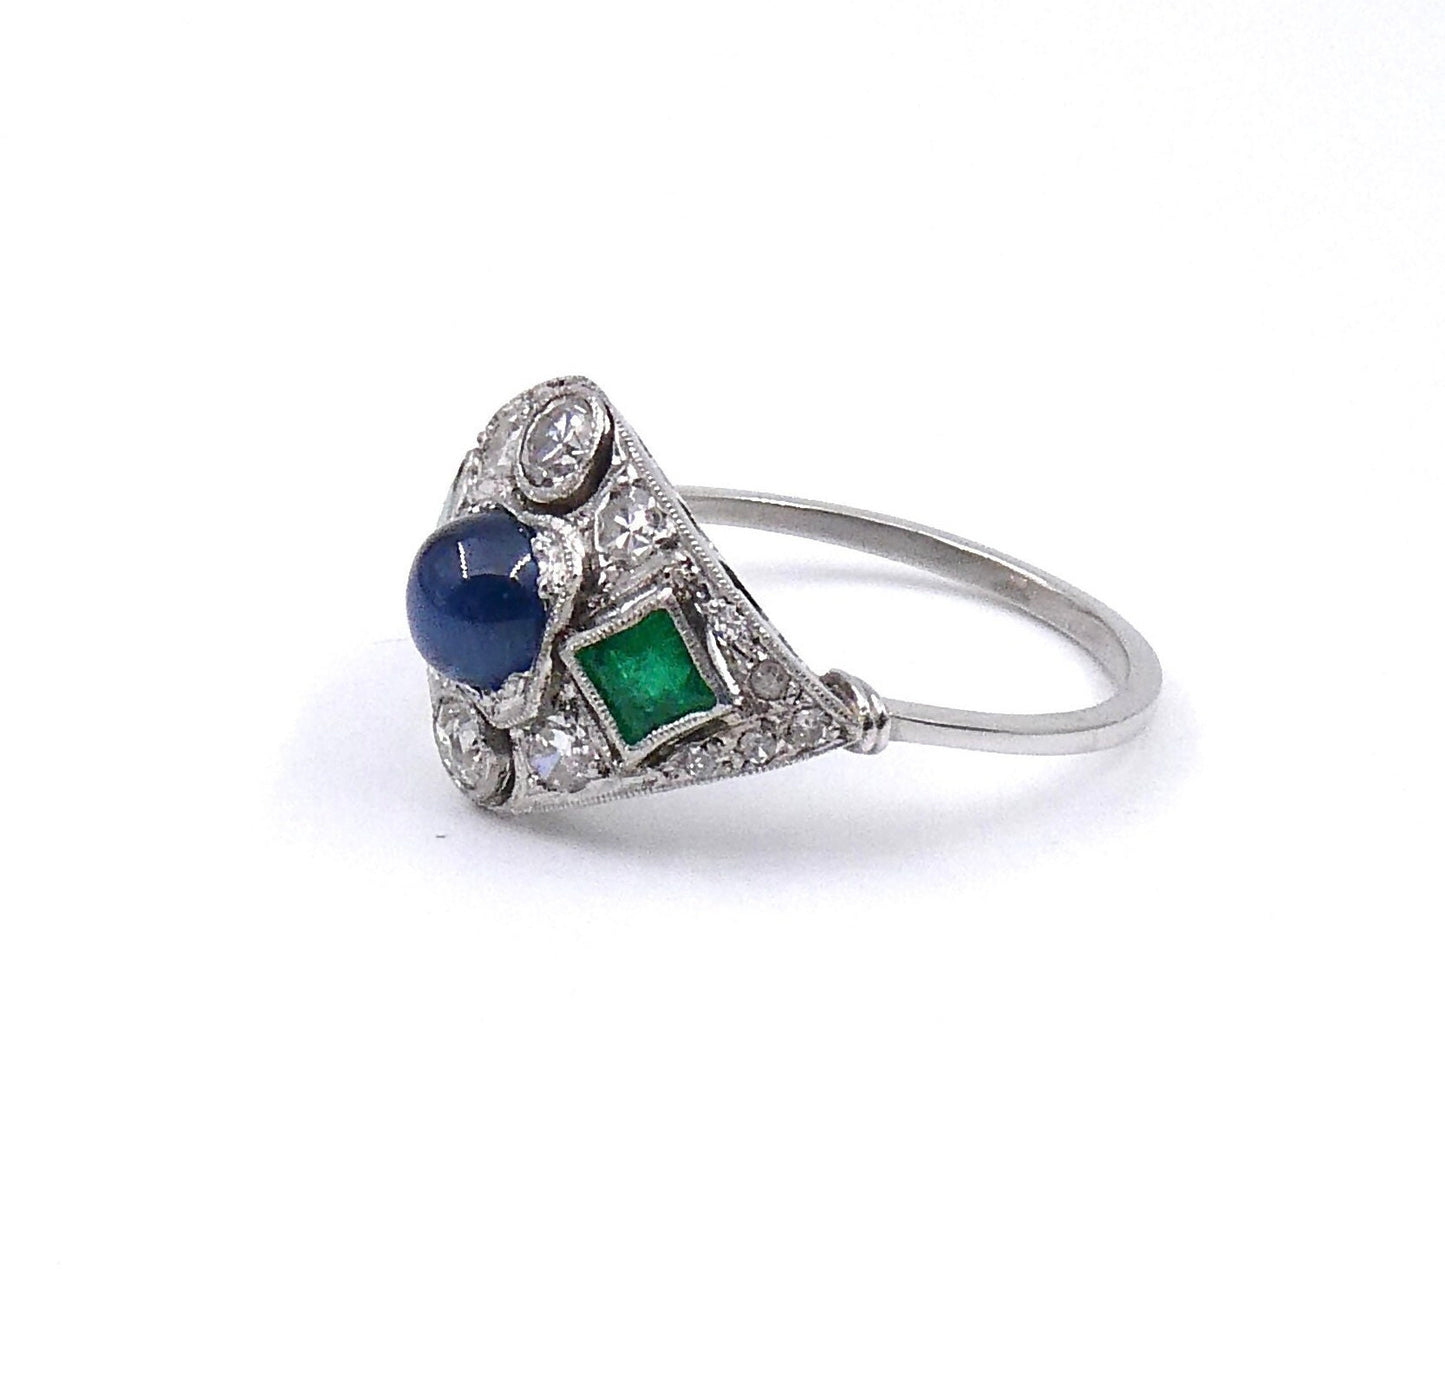 Antique sapphire emerald ring platinum set with diamonds, an Art Deco sapphire ring.